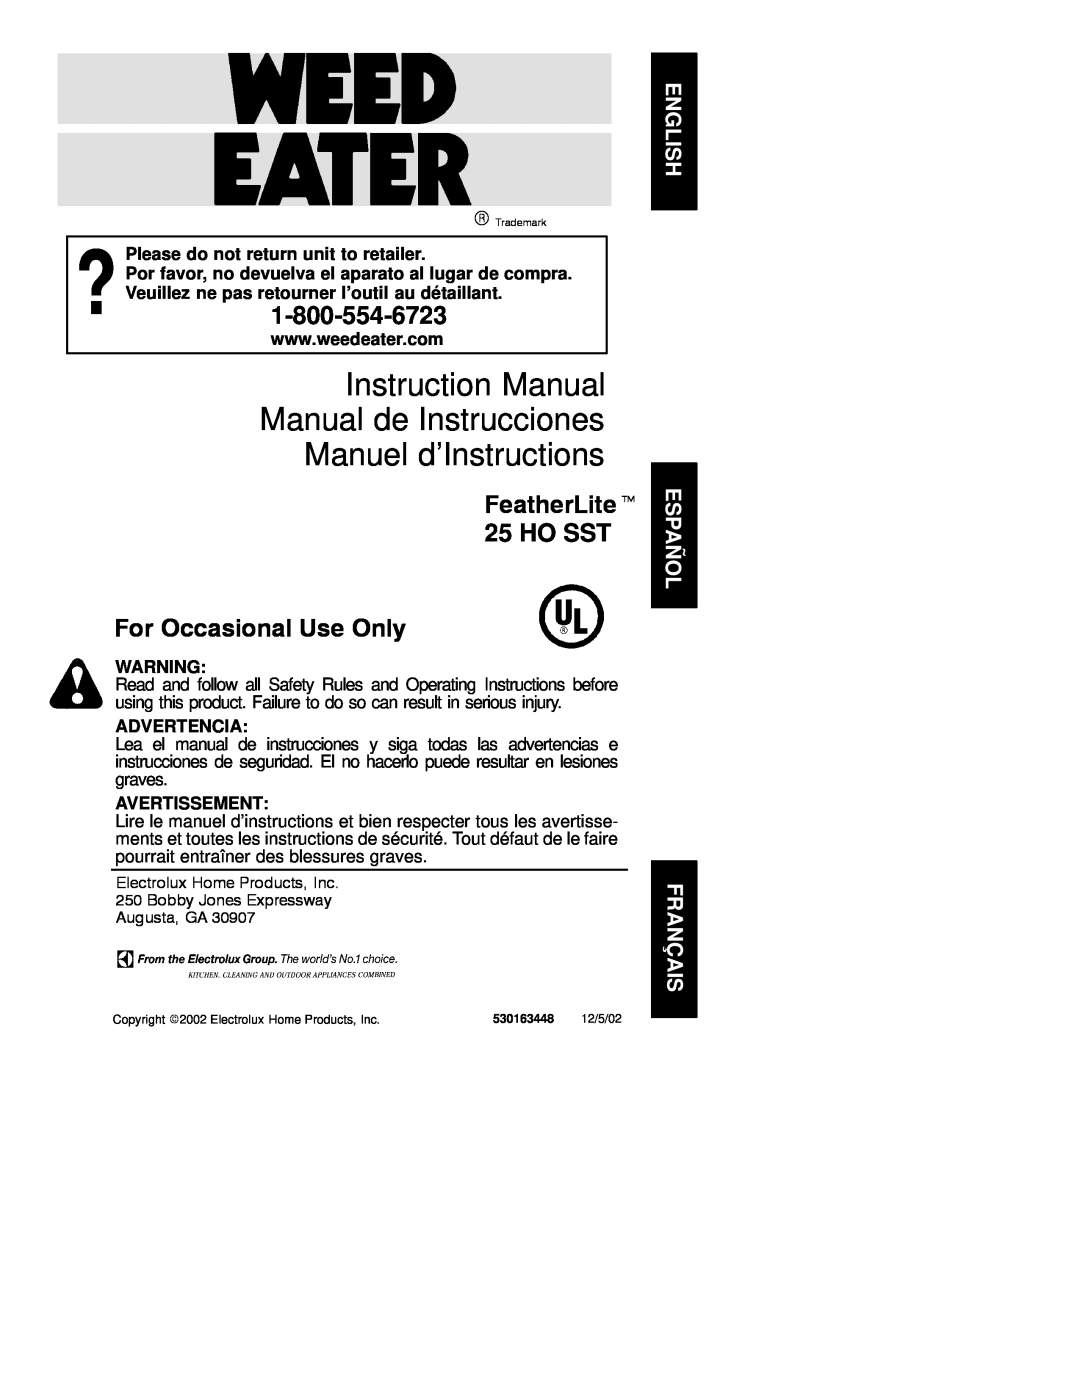 Weed Eater 530163448 instruction manual Please do not return unit to retailer, Advertencia, Avertissement, FeatherLitet 